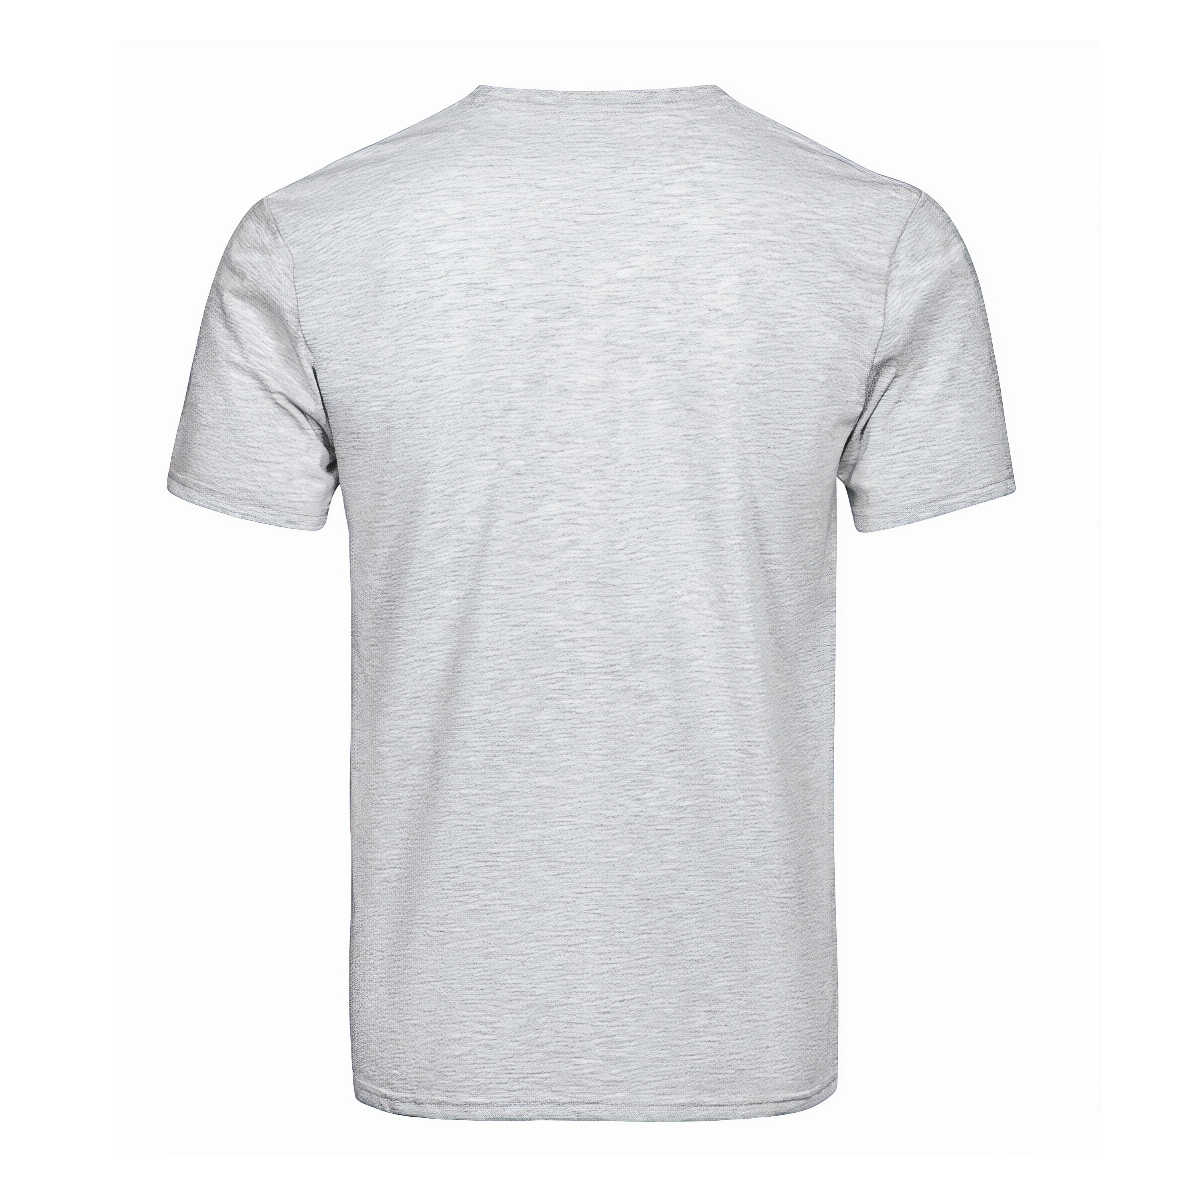 Weir Tartan Crest T-shirt - I'm not yelling style